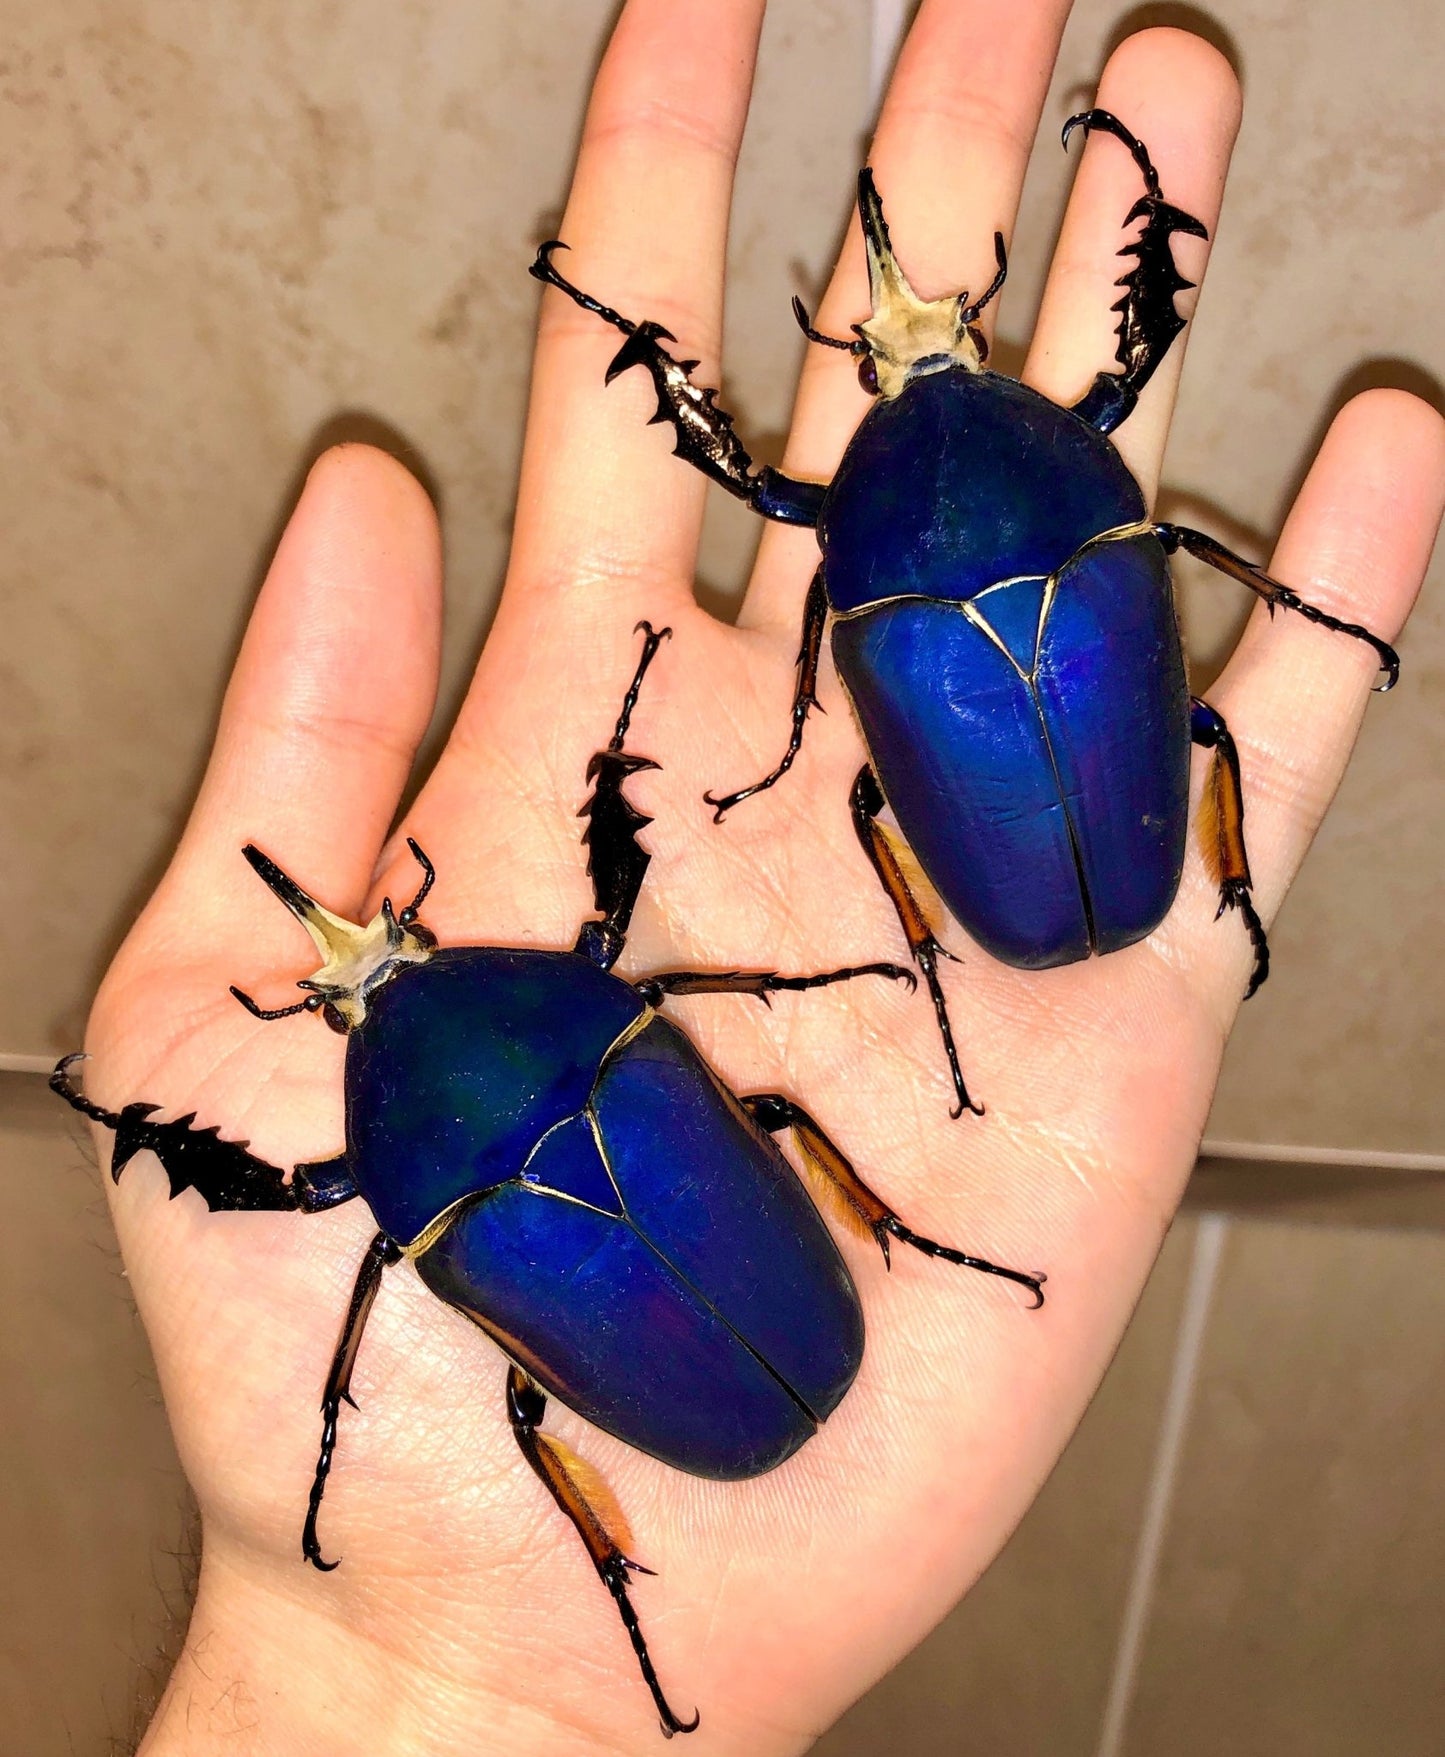 Larvae - "Pure Blue" Giant Flower Beetle, (Mecynorrhina ugandensis) - Richard’s Inverts